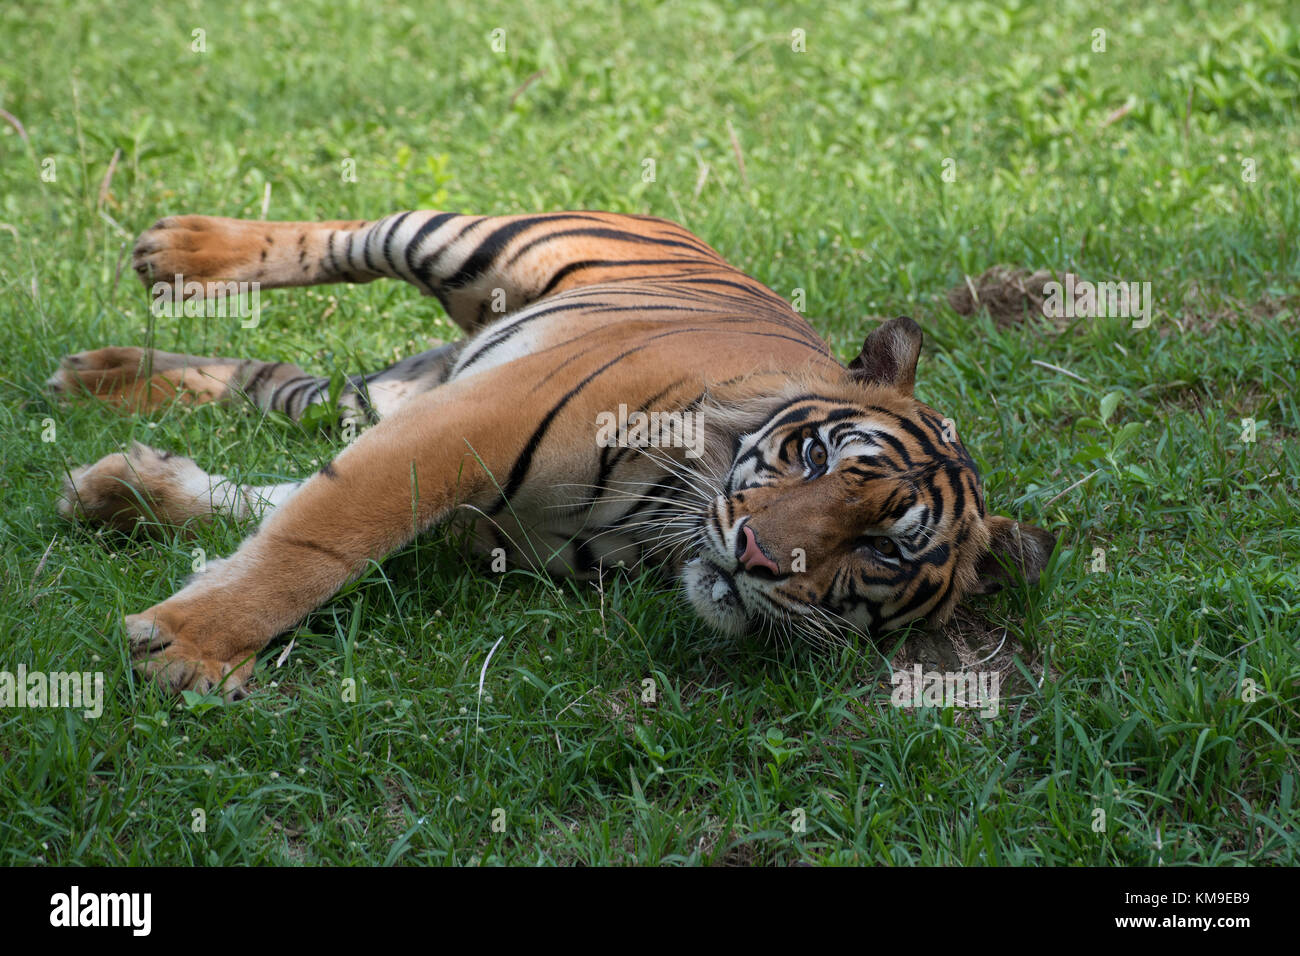 Sumatran tiger lying on the grass Stock Photo